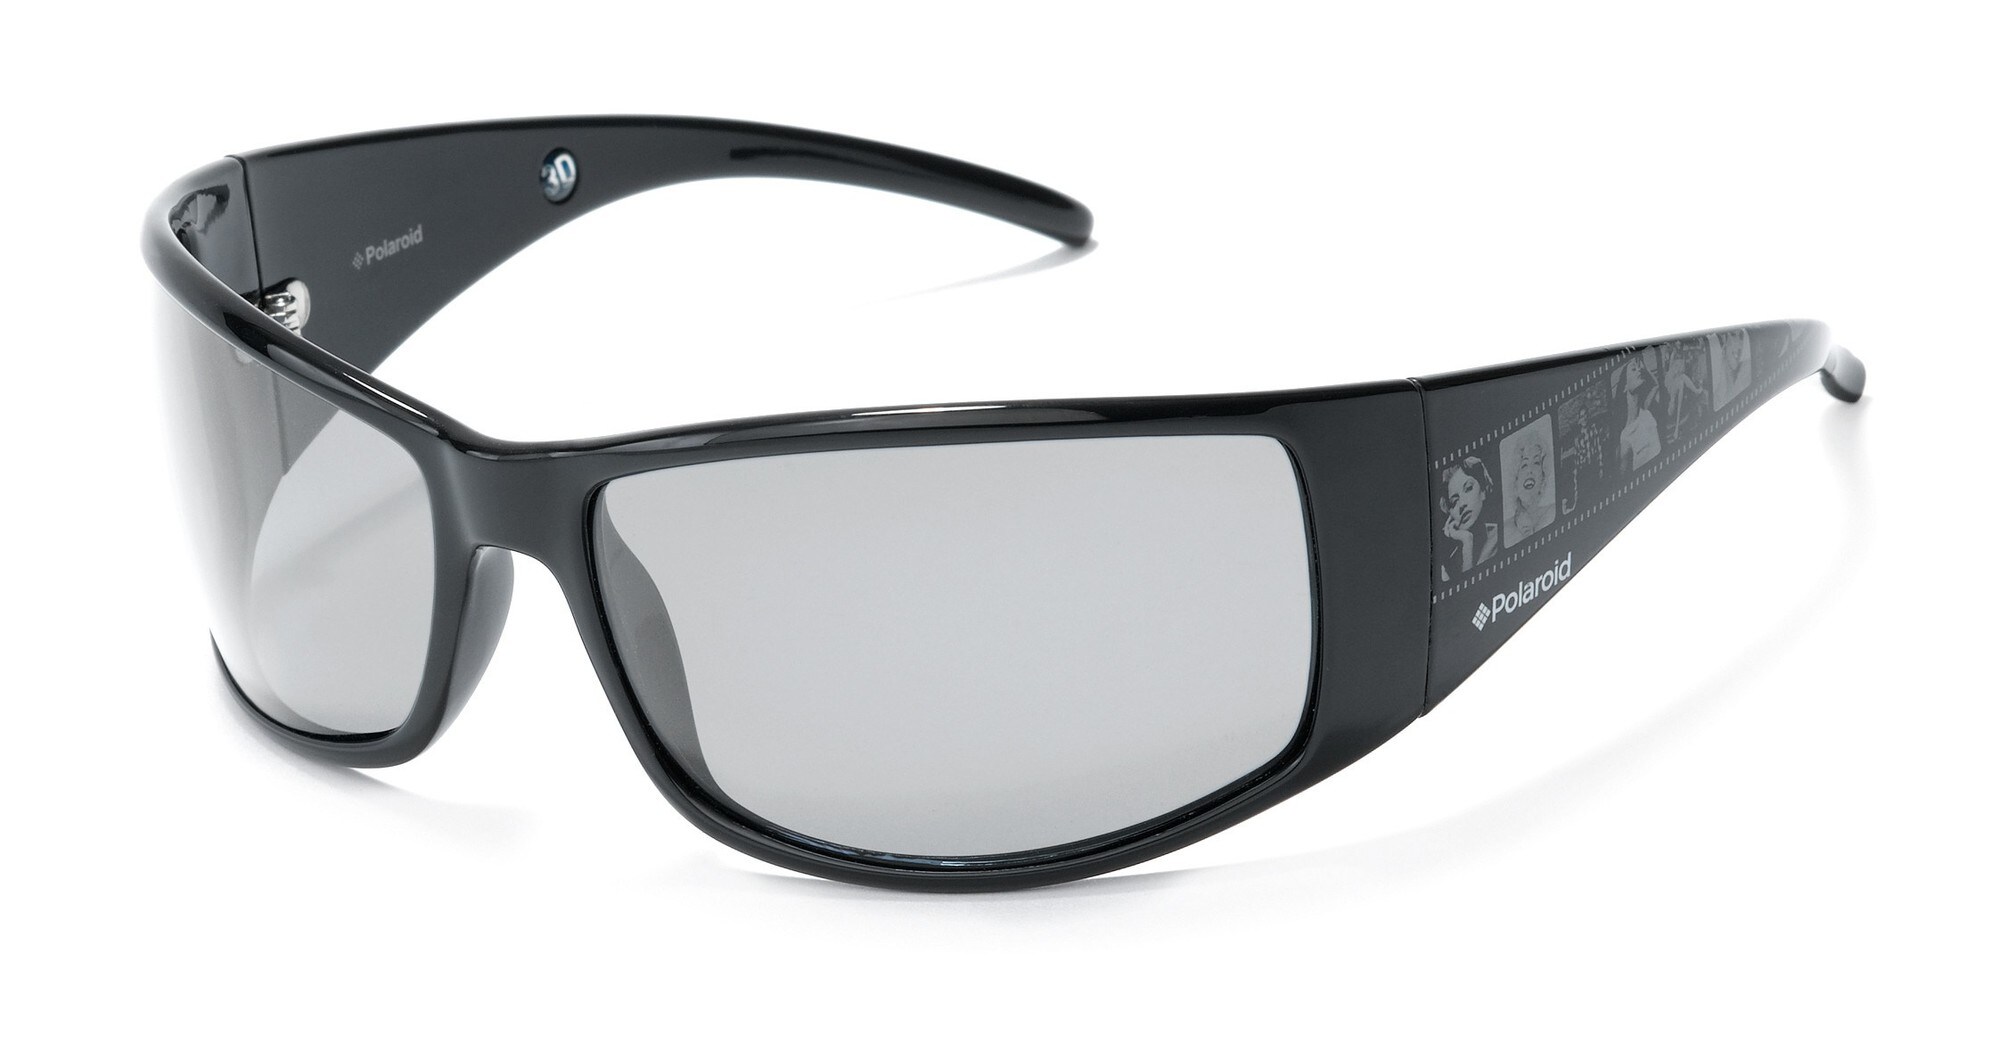 Polaroid Premium 3D-glasögon (passiva) N8104A (svart) - Tillbehör ...